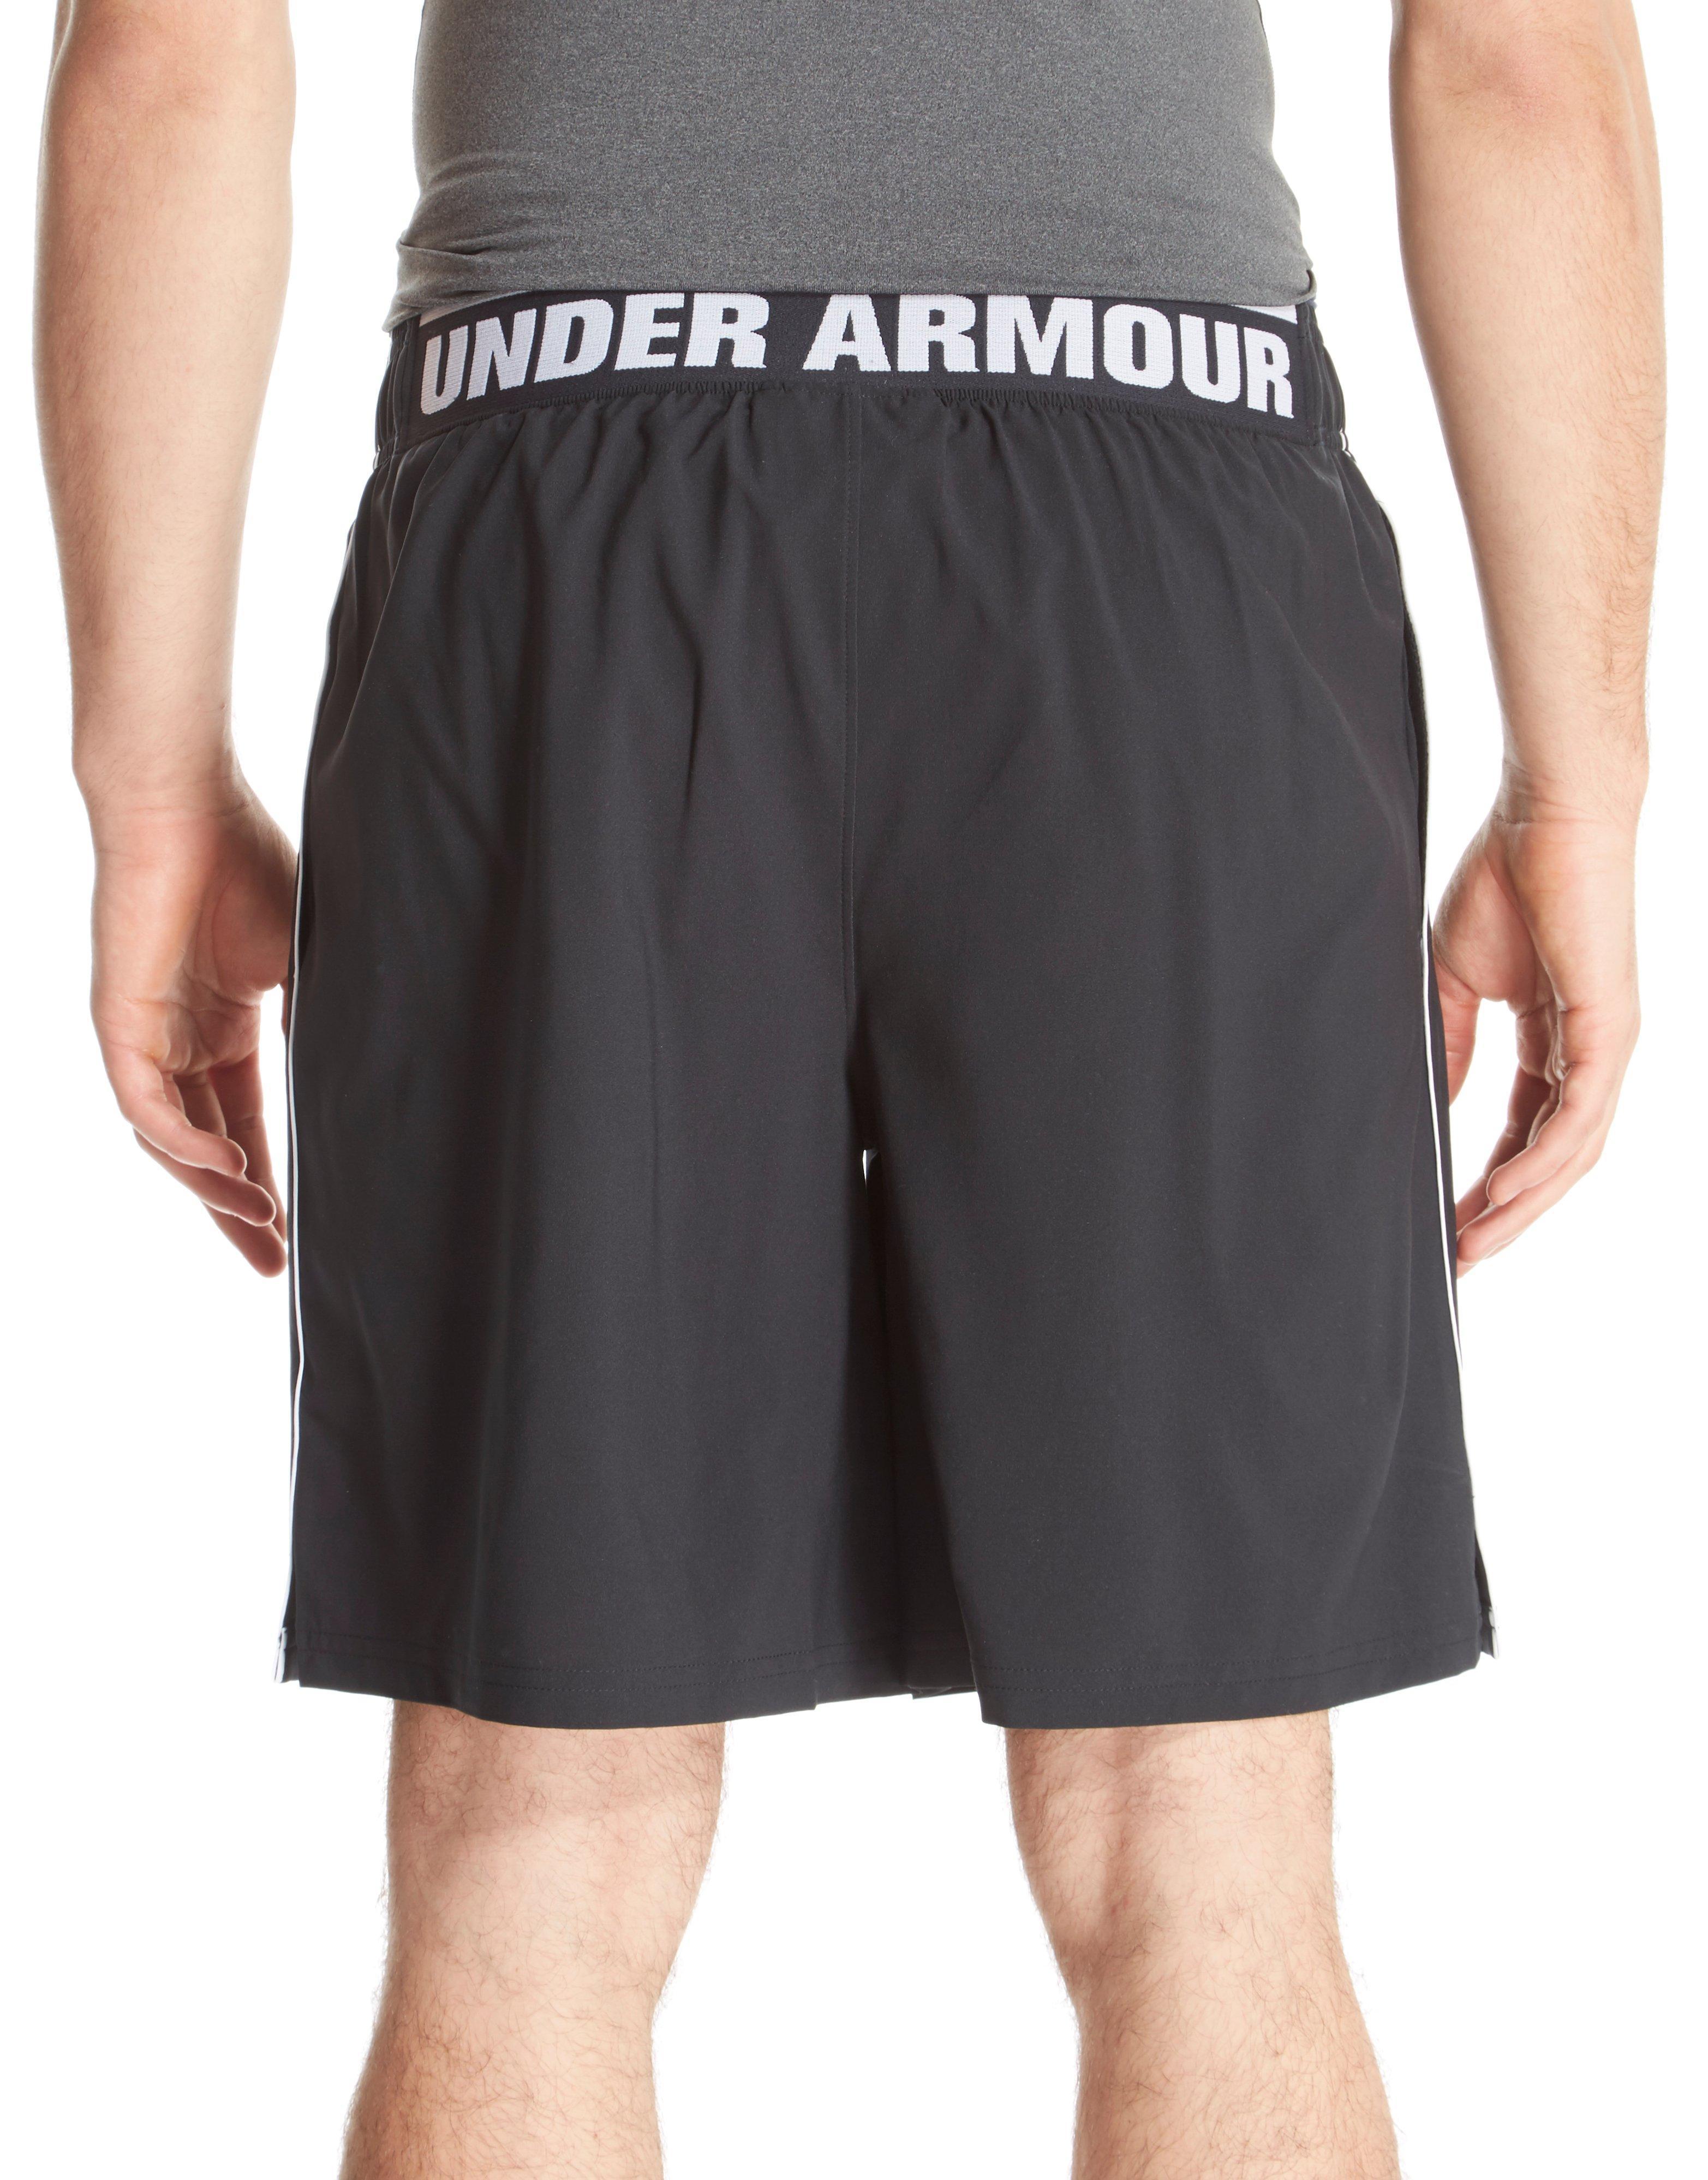 under armour mirage 8 inch shorts Off 66% - sirinscrochet.com